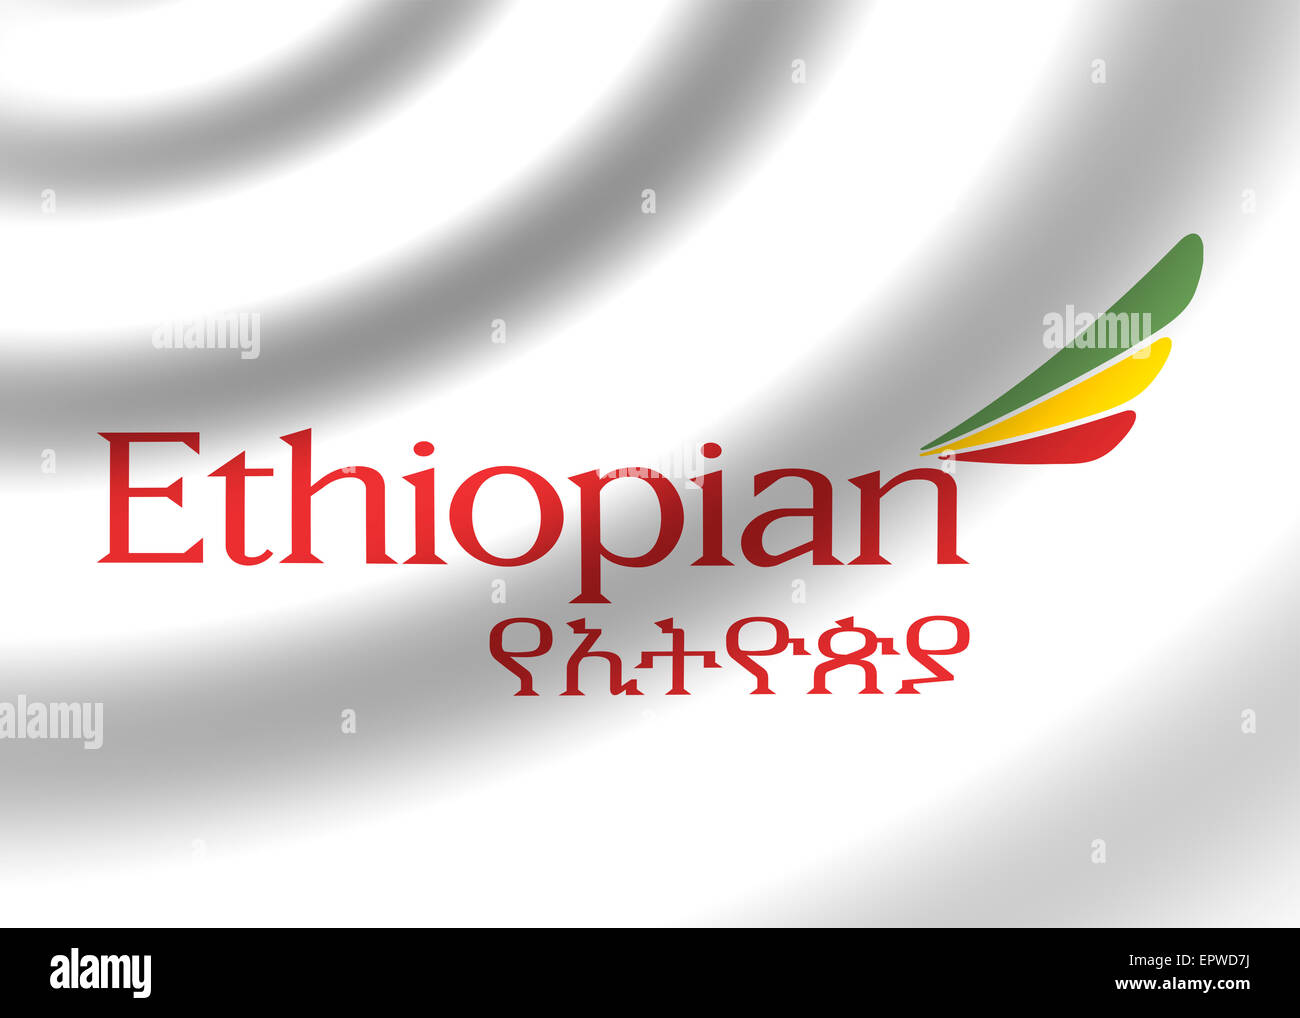 Ethiopian Airlines logo icon flag symbol emblem sign Stock Photo